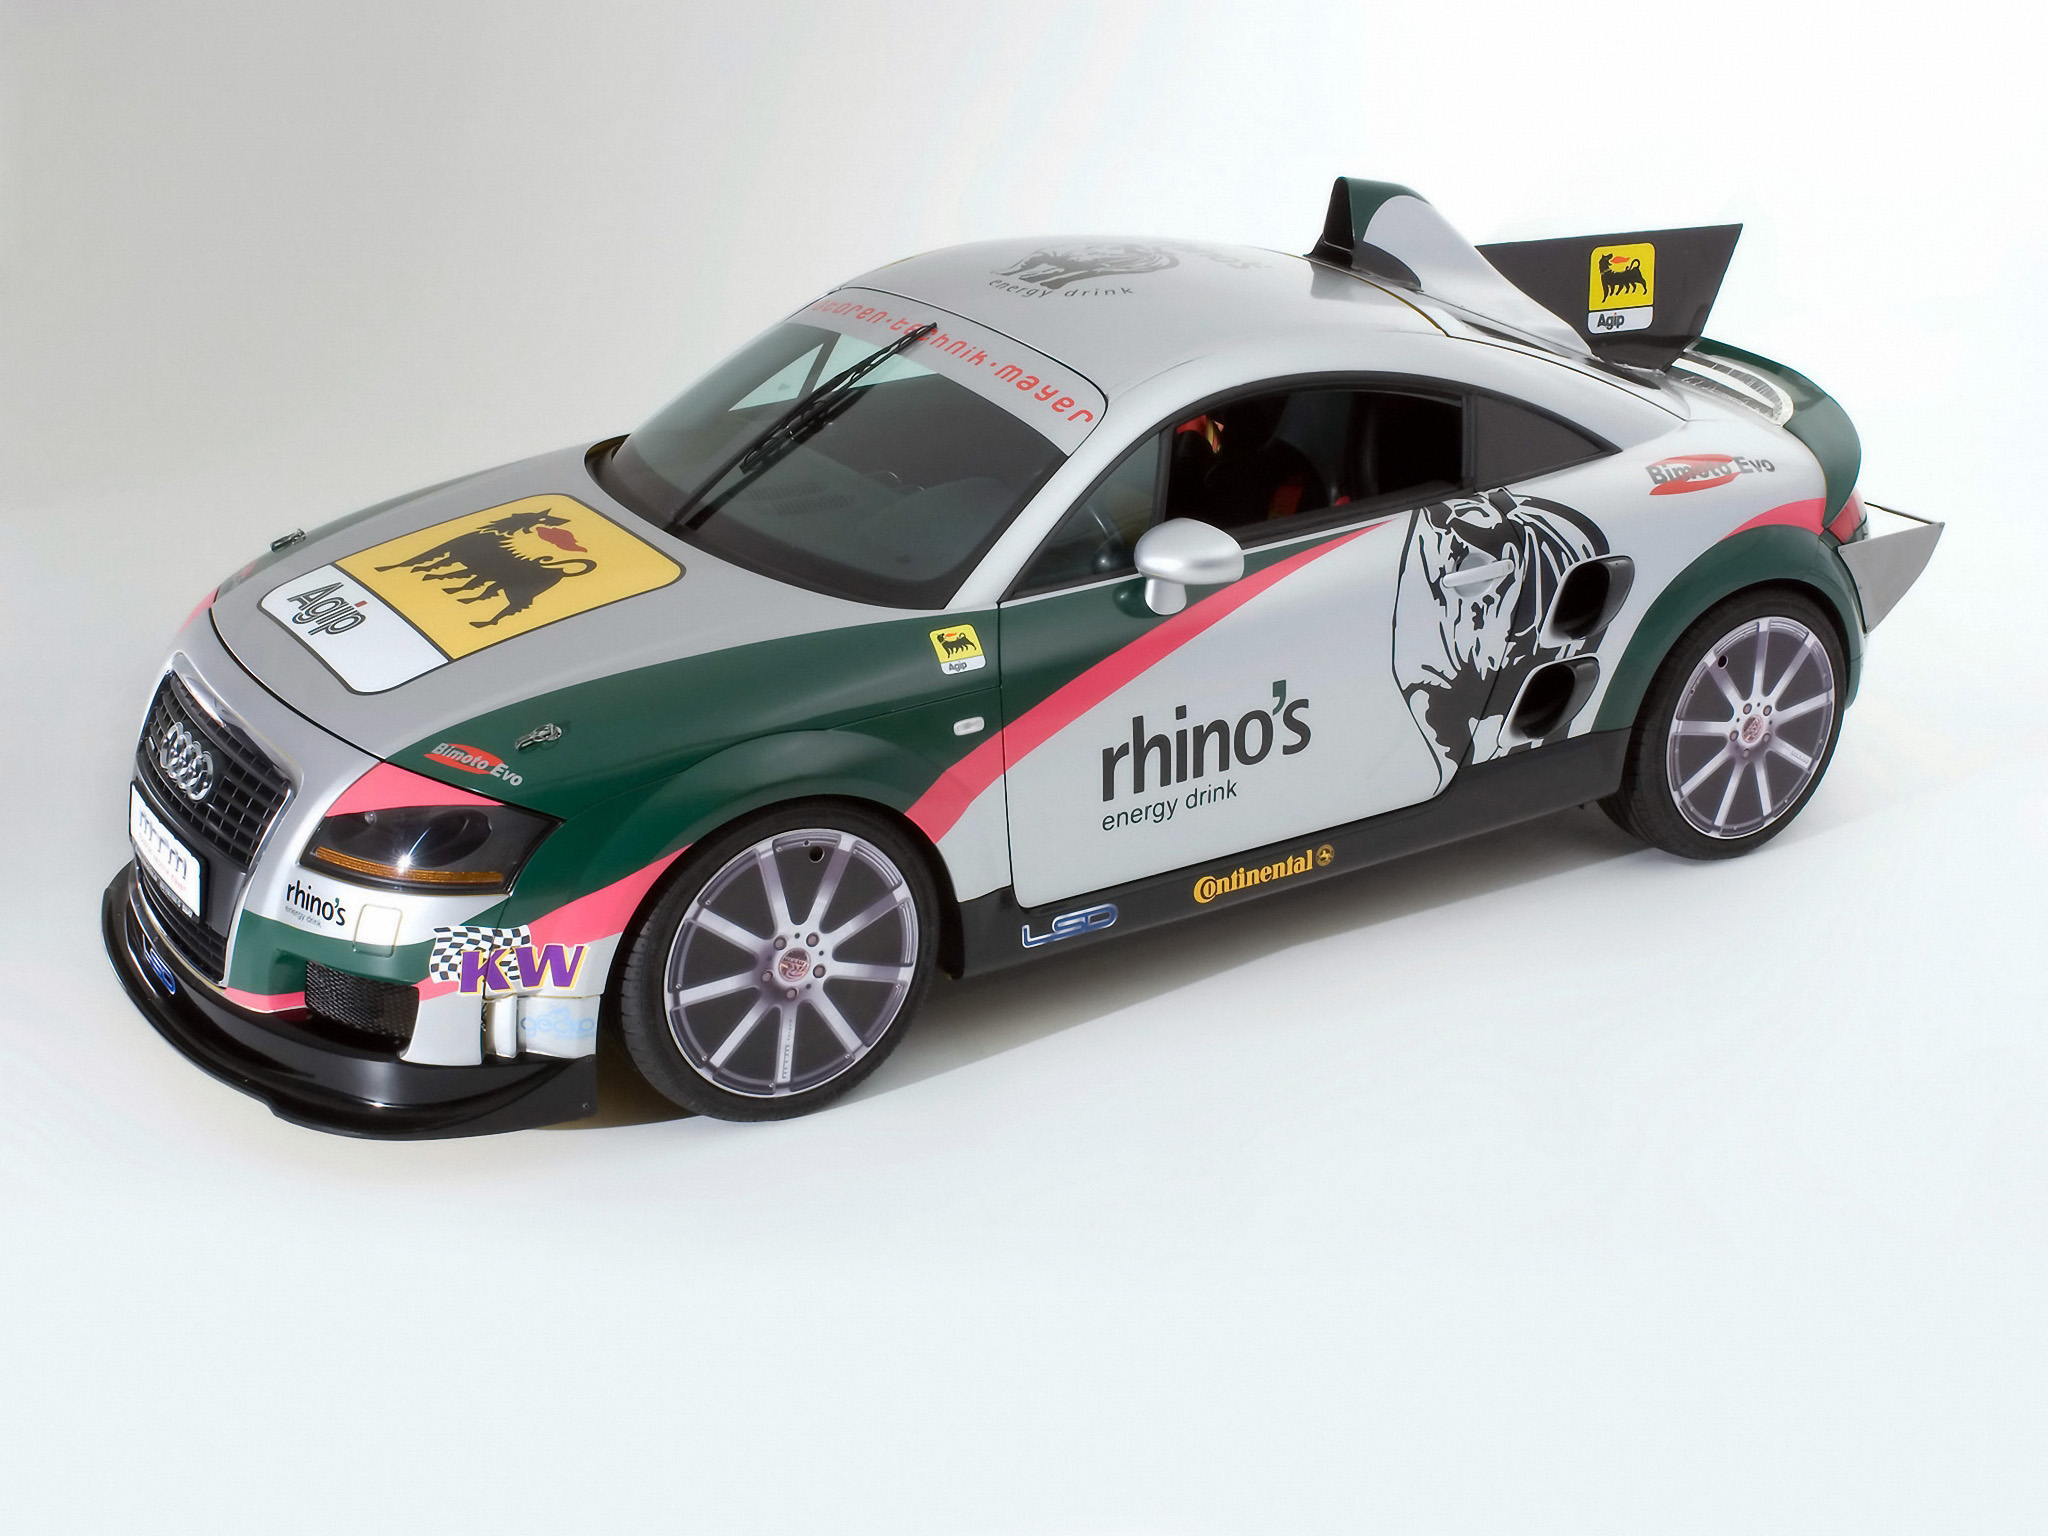 2007, Mtm, Audi, T t, Bimoto, Record car, Race, Racing, Tuning Wallpaper